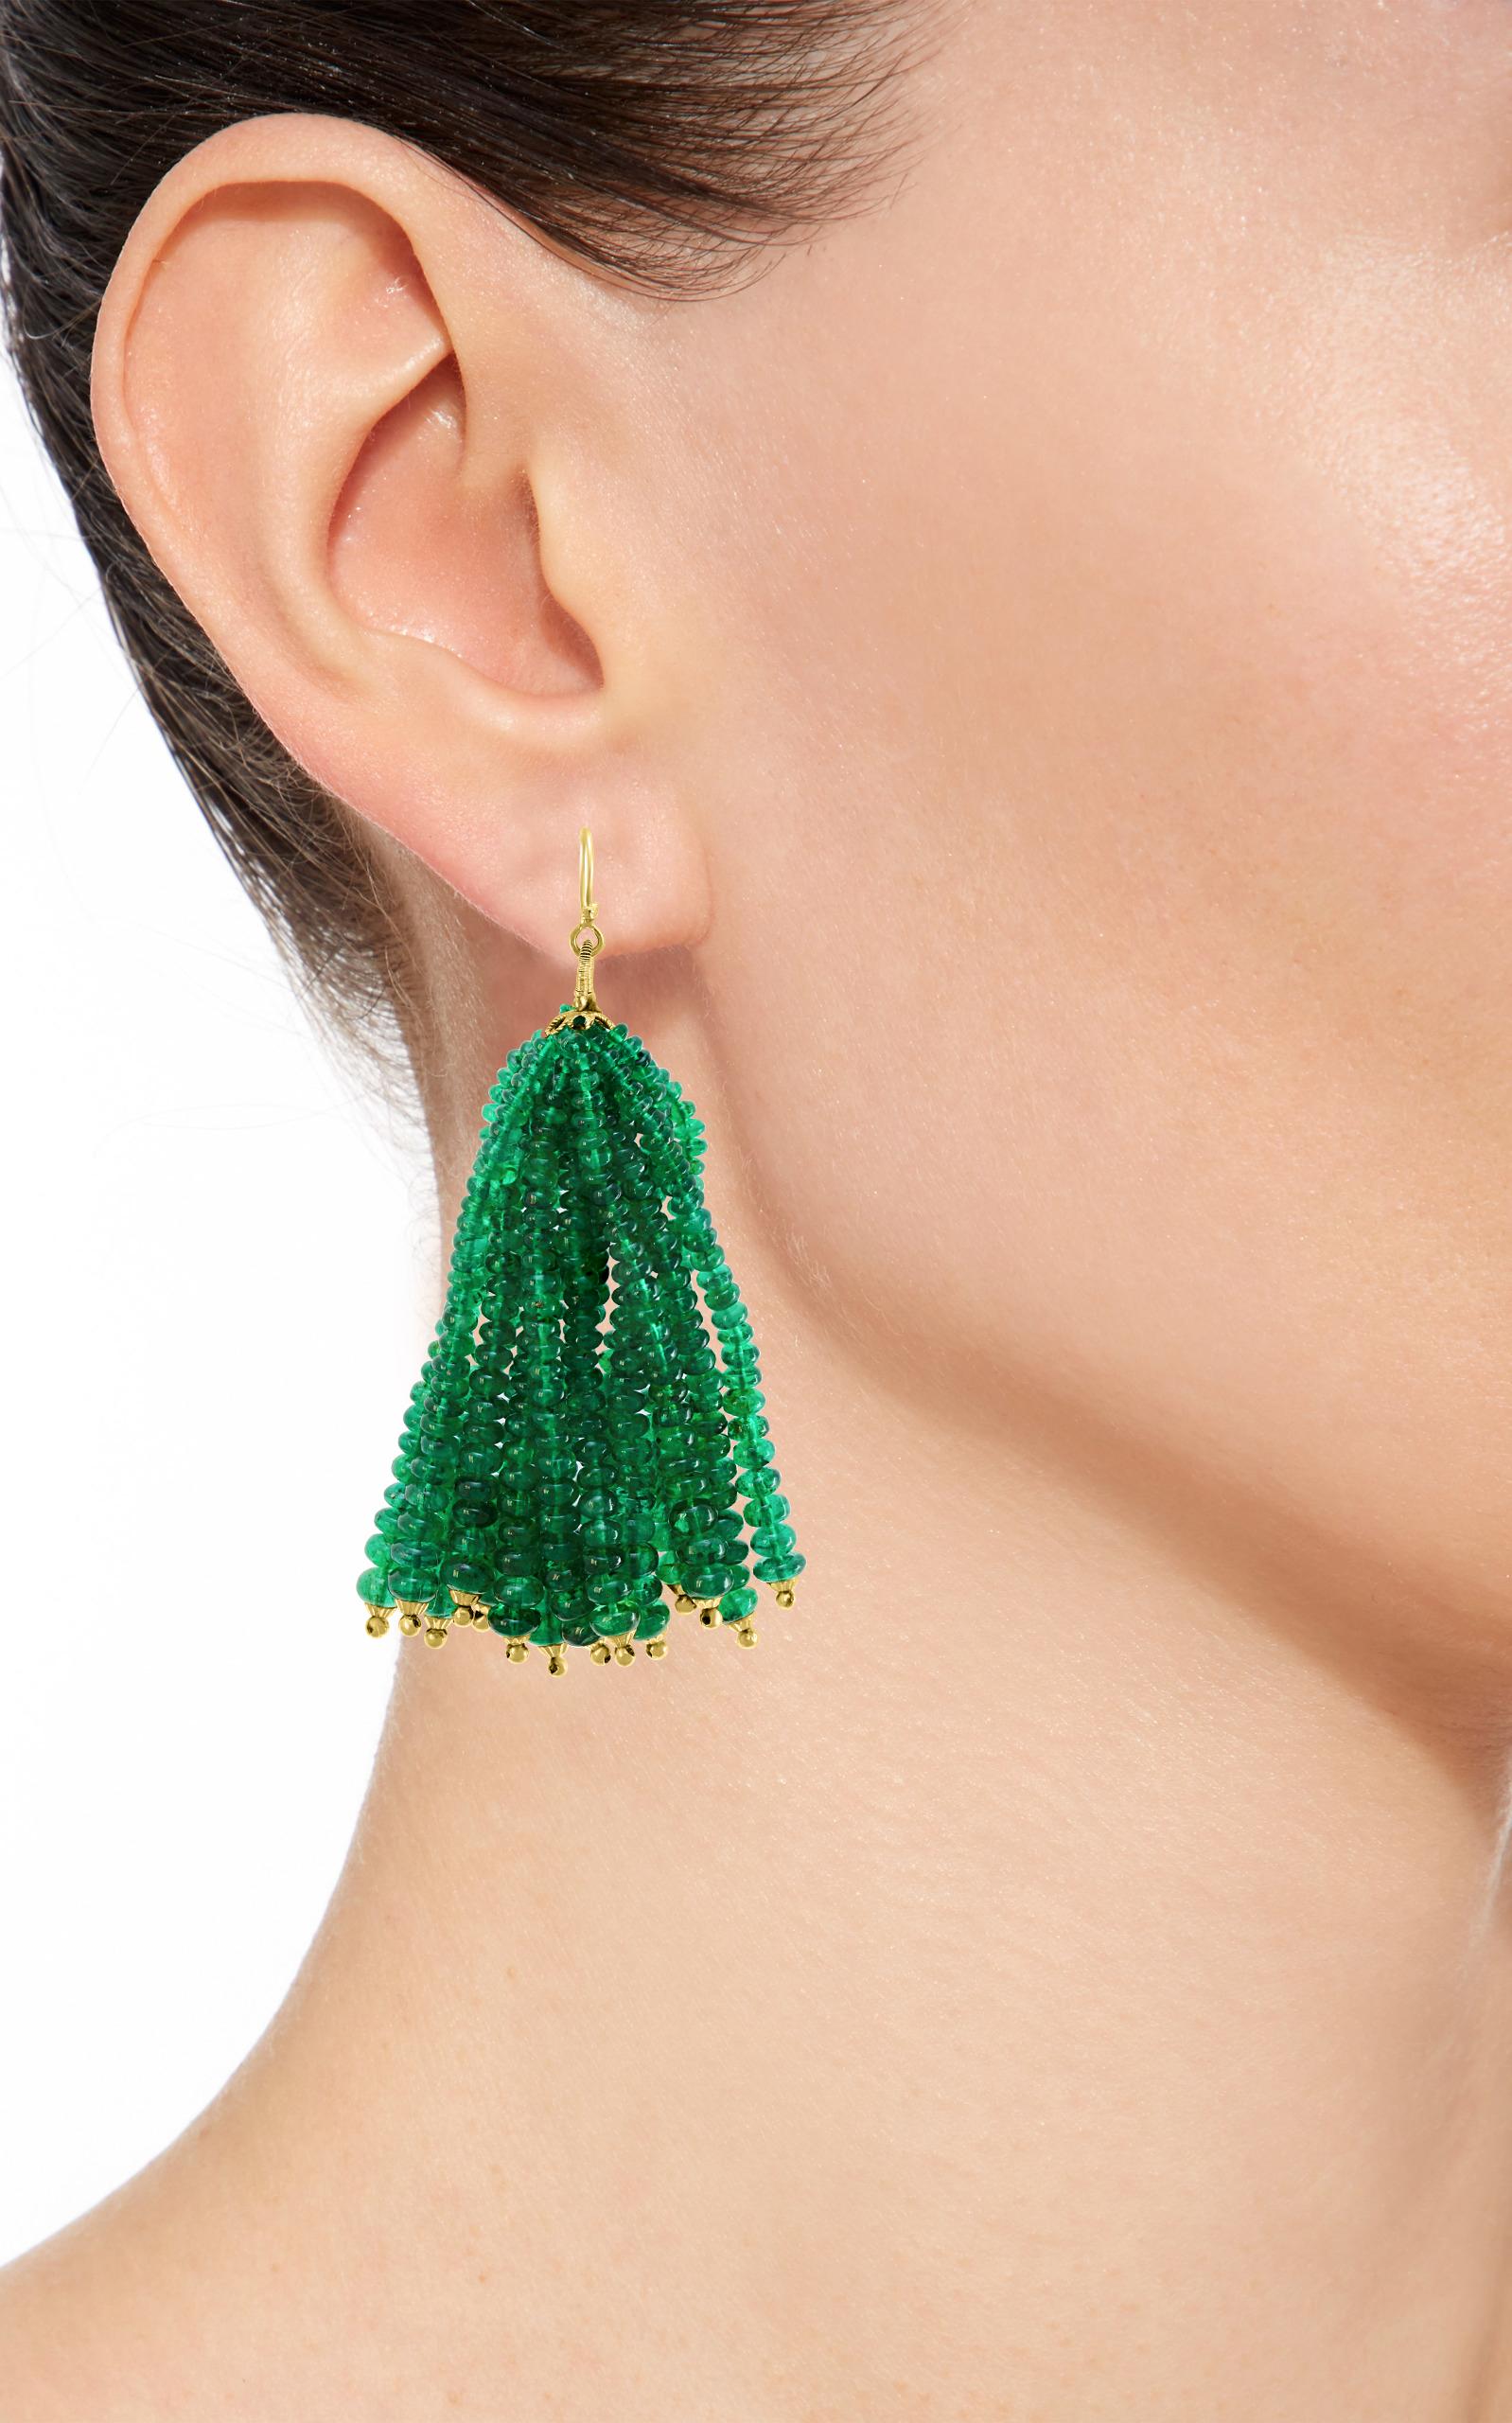 198 Carat Colombian Emerald Beads Hanging Drop Earrings 18 Karat Gold For Sale 4